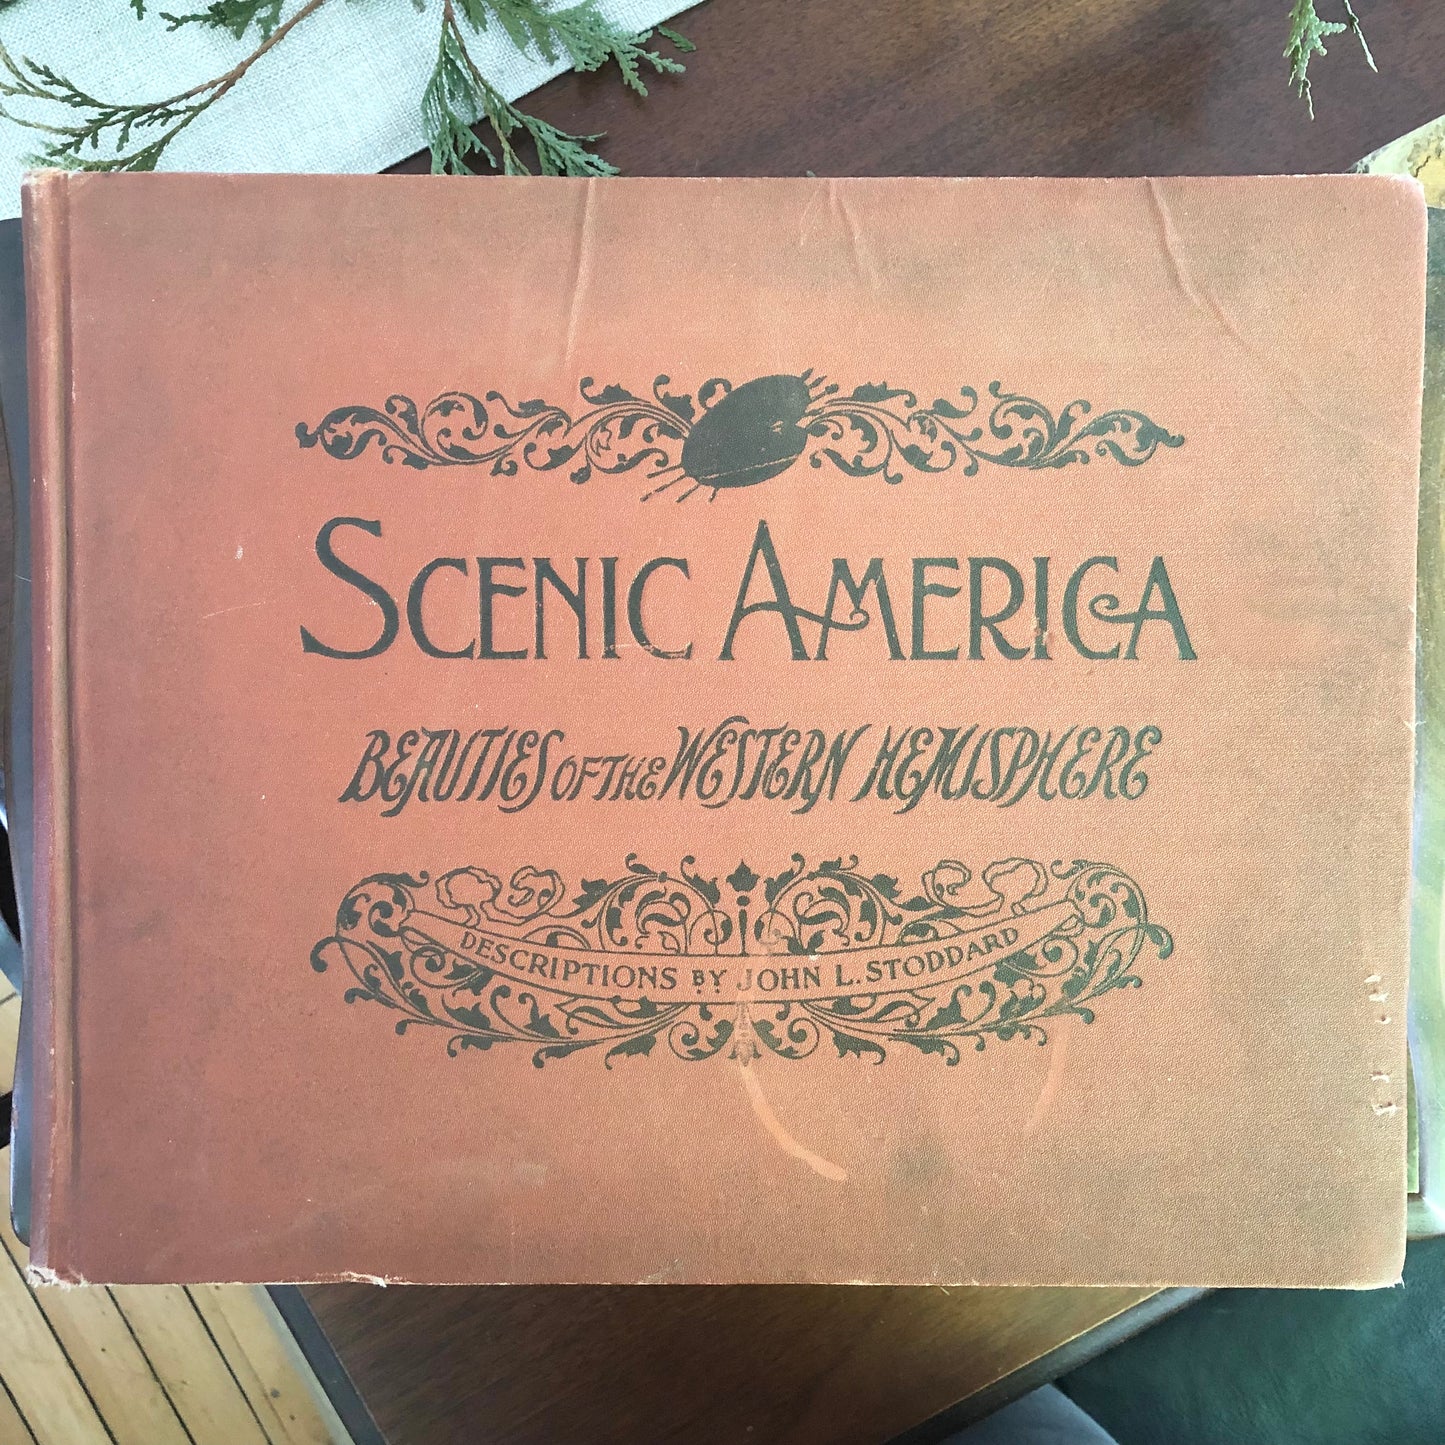 Scenic America: The Beauties of the Western Hemisphere